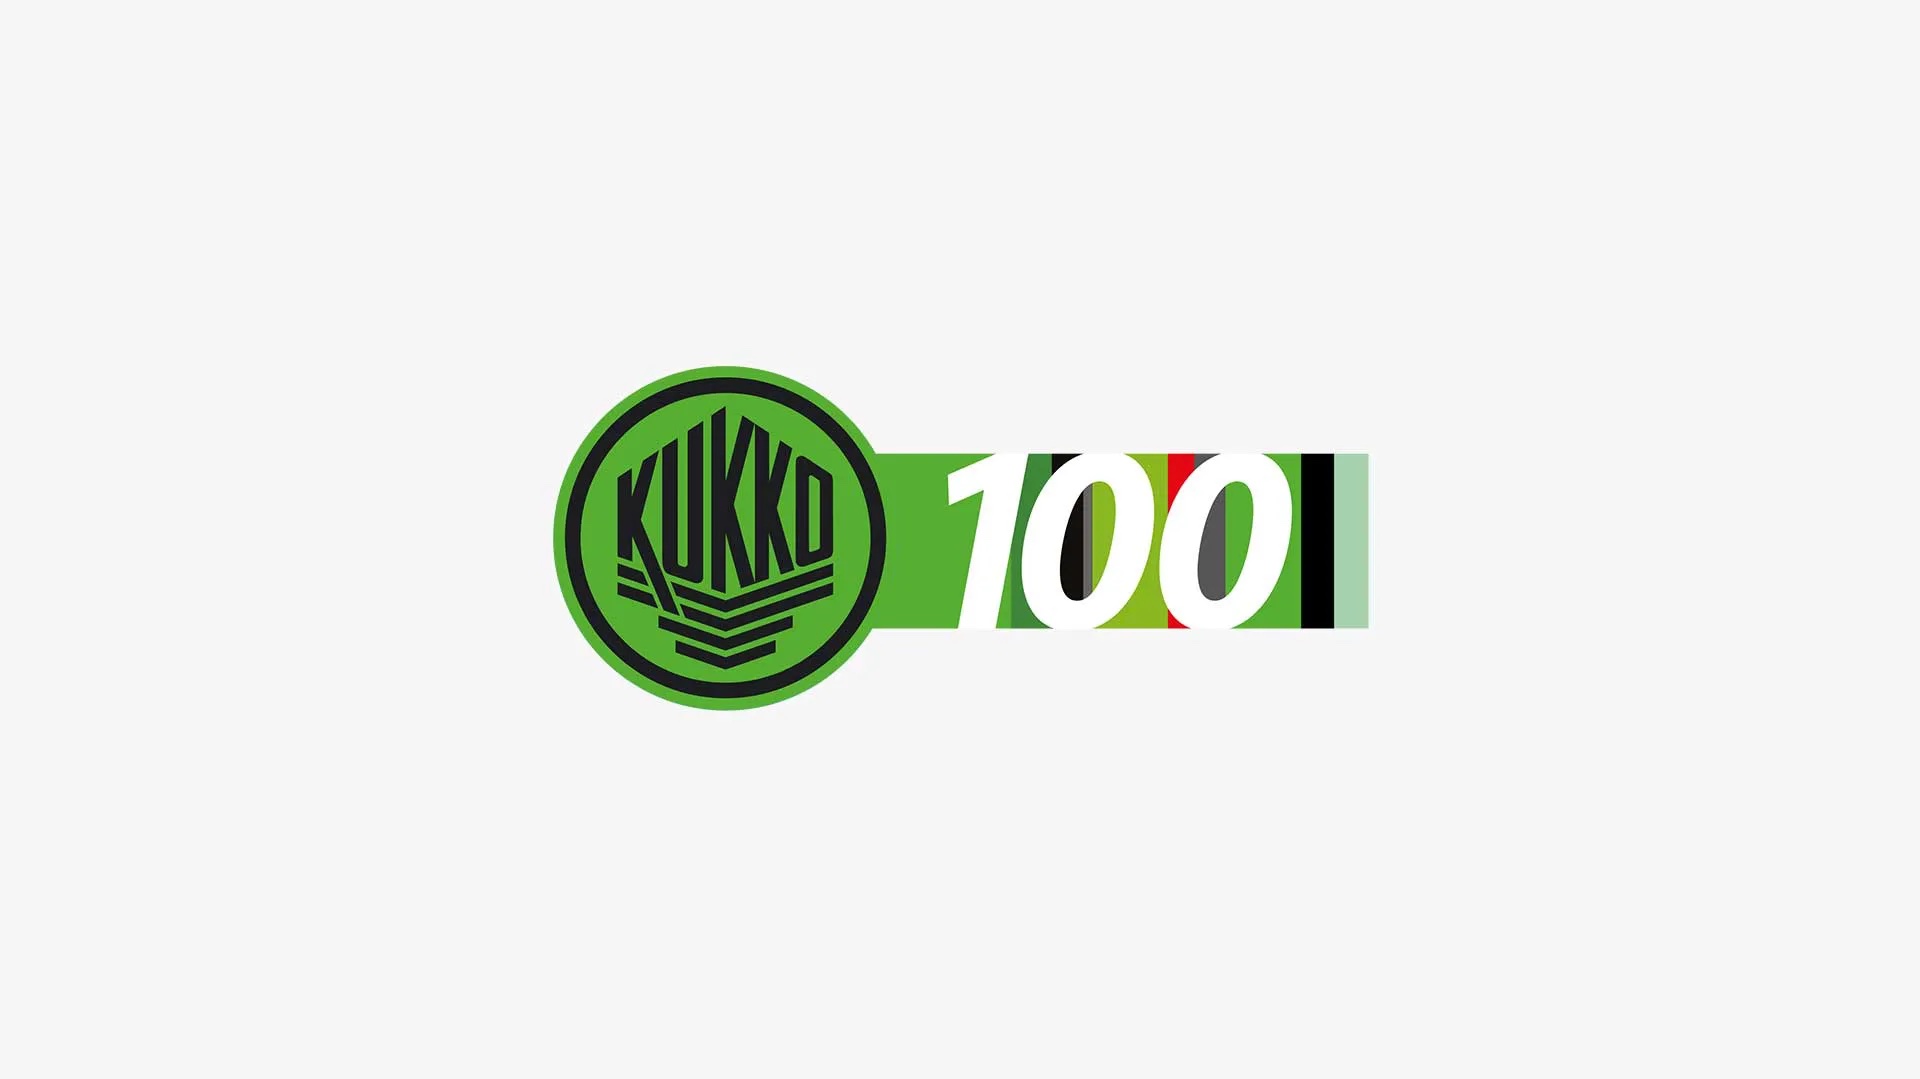 The KUKKO logo for the 100th anniversary